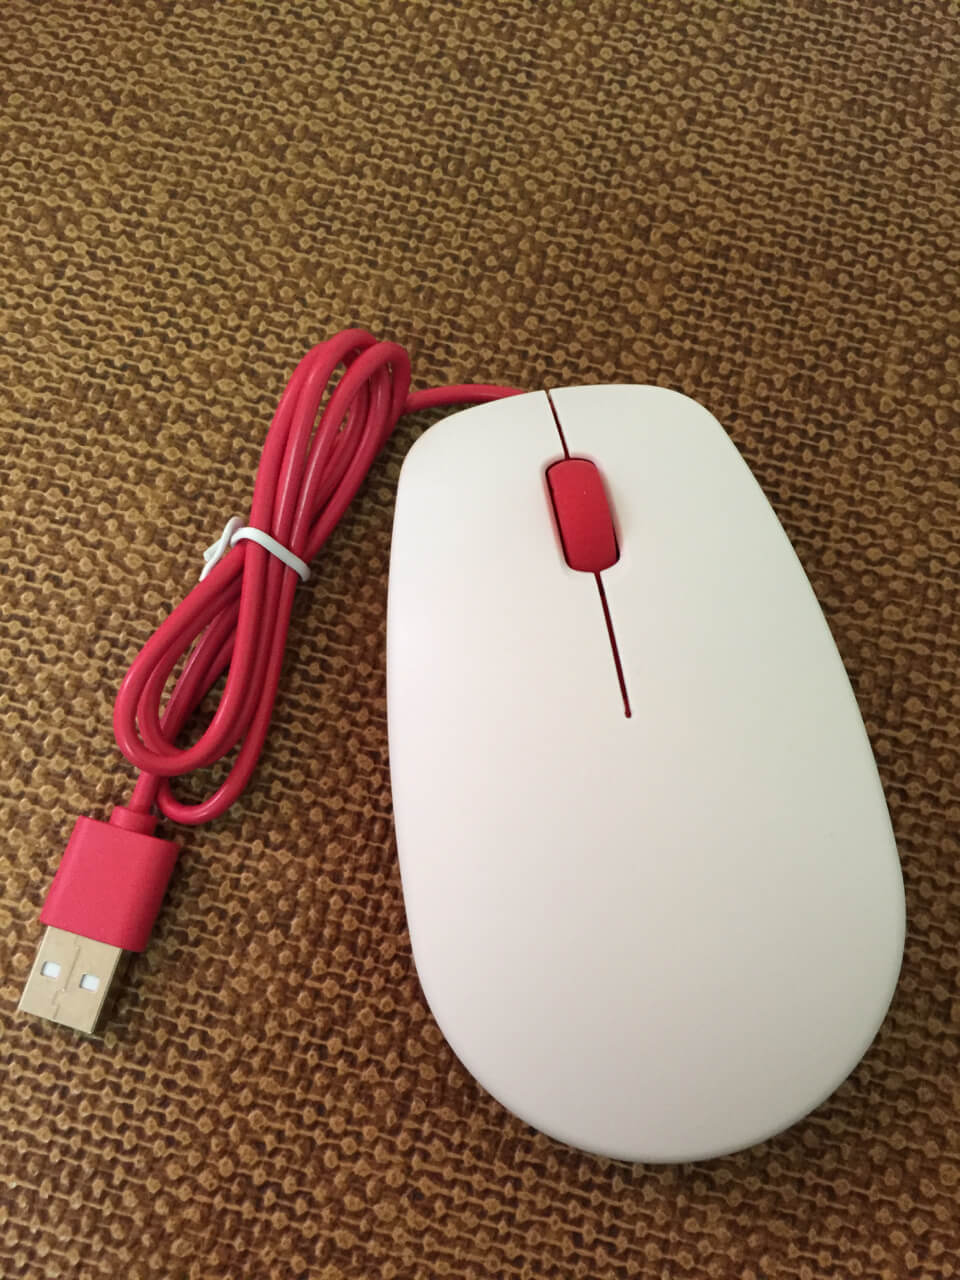 Raspberry Pi 4 Desktop Kit mouse